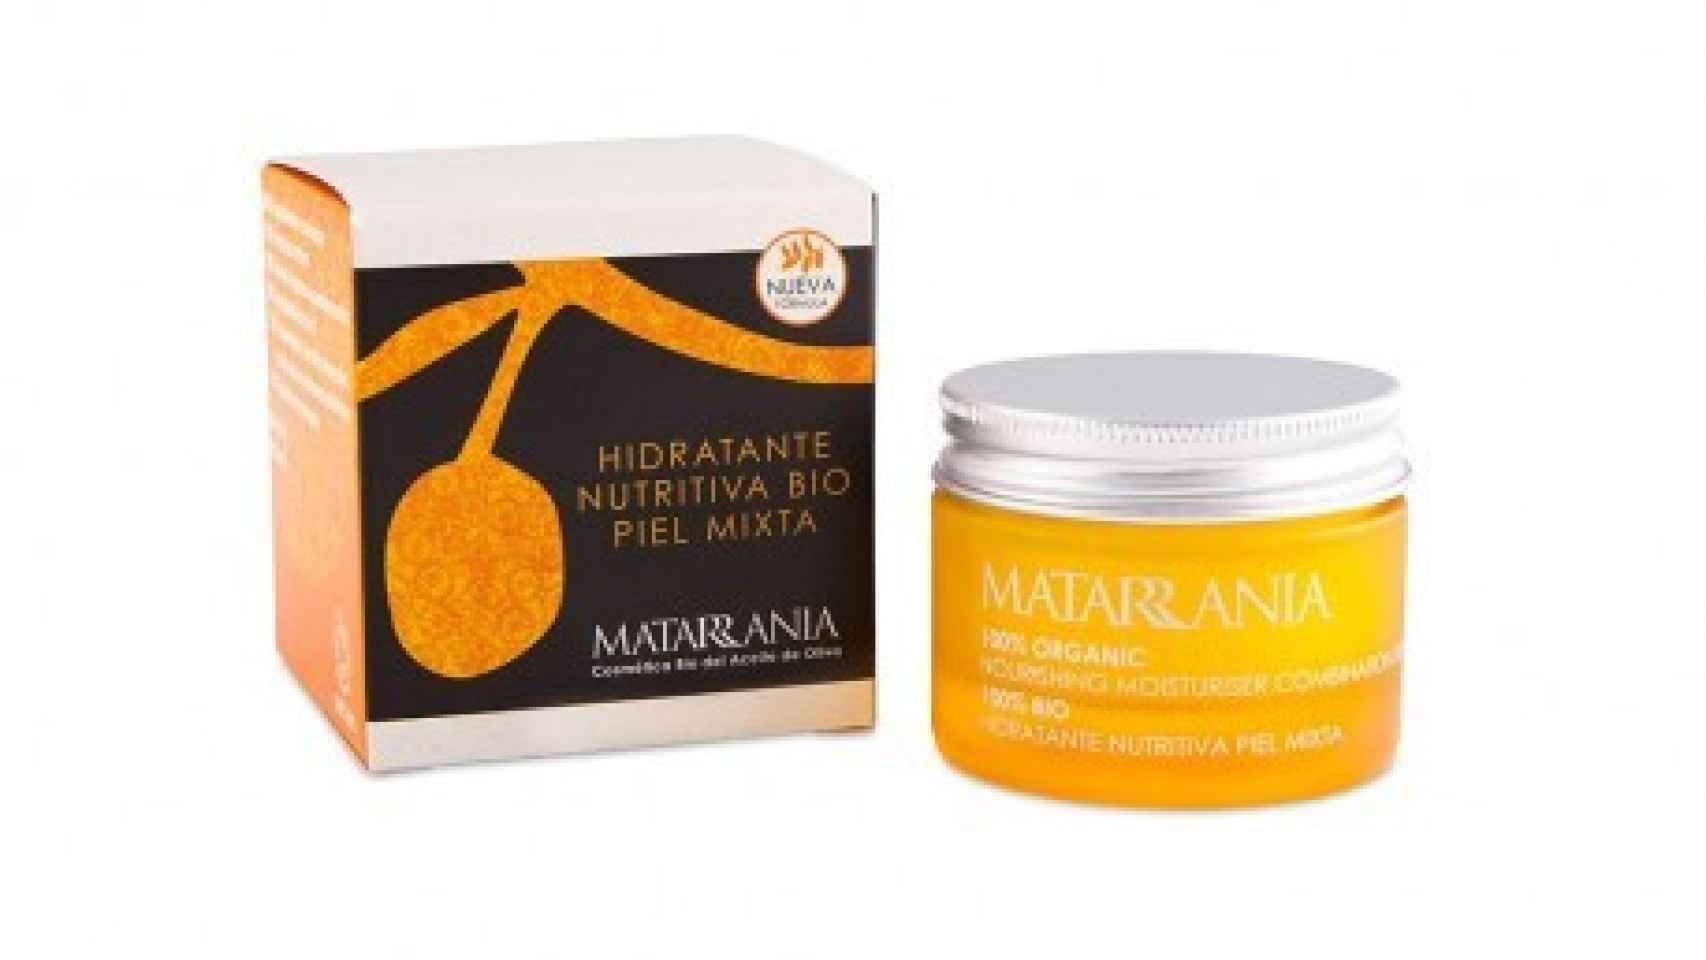 La crema hidratante de la marca Matarrania.